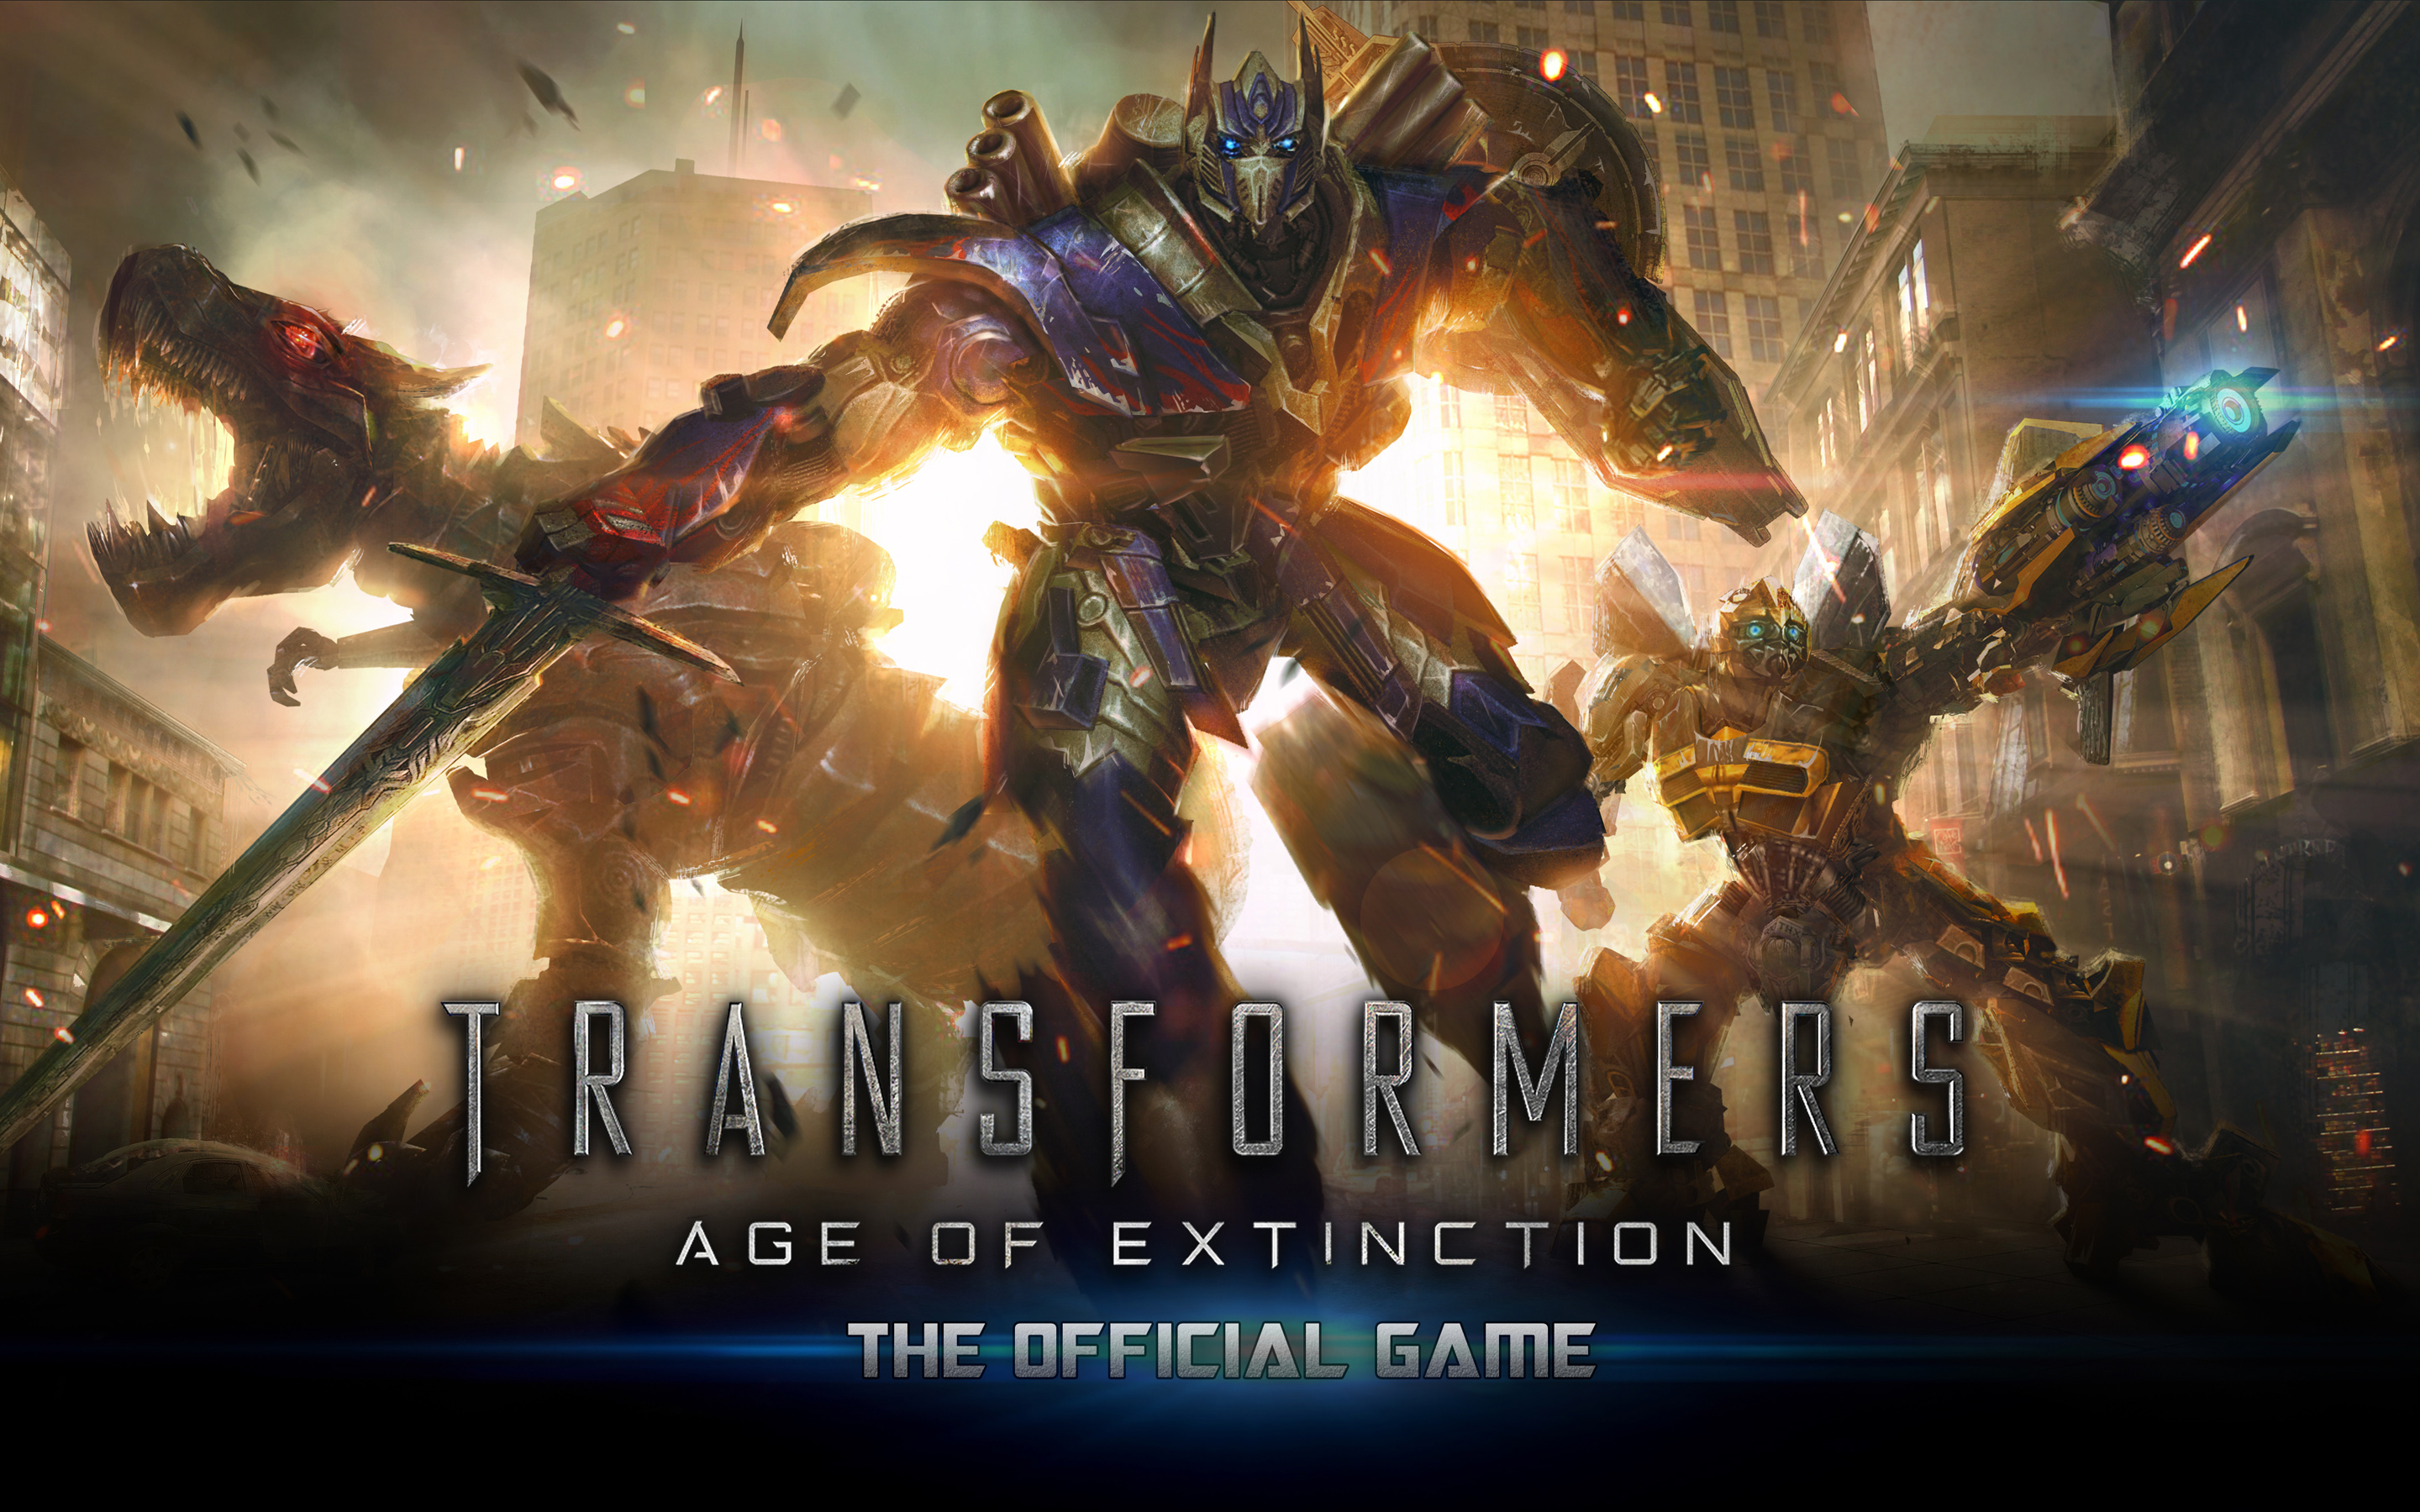 44+] Transformers Age of Extinction Wallpaper - WallpaperSafari